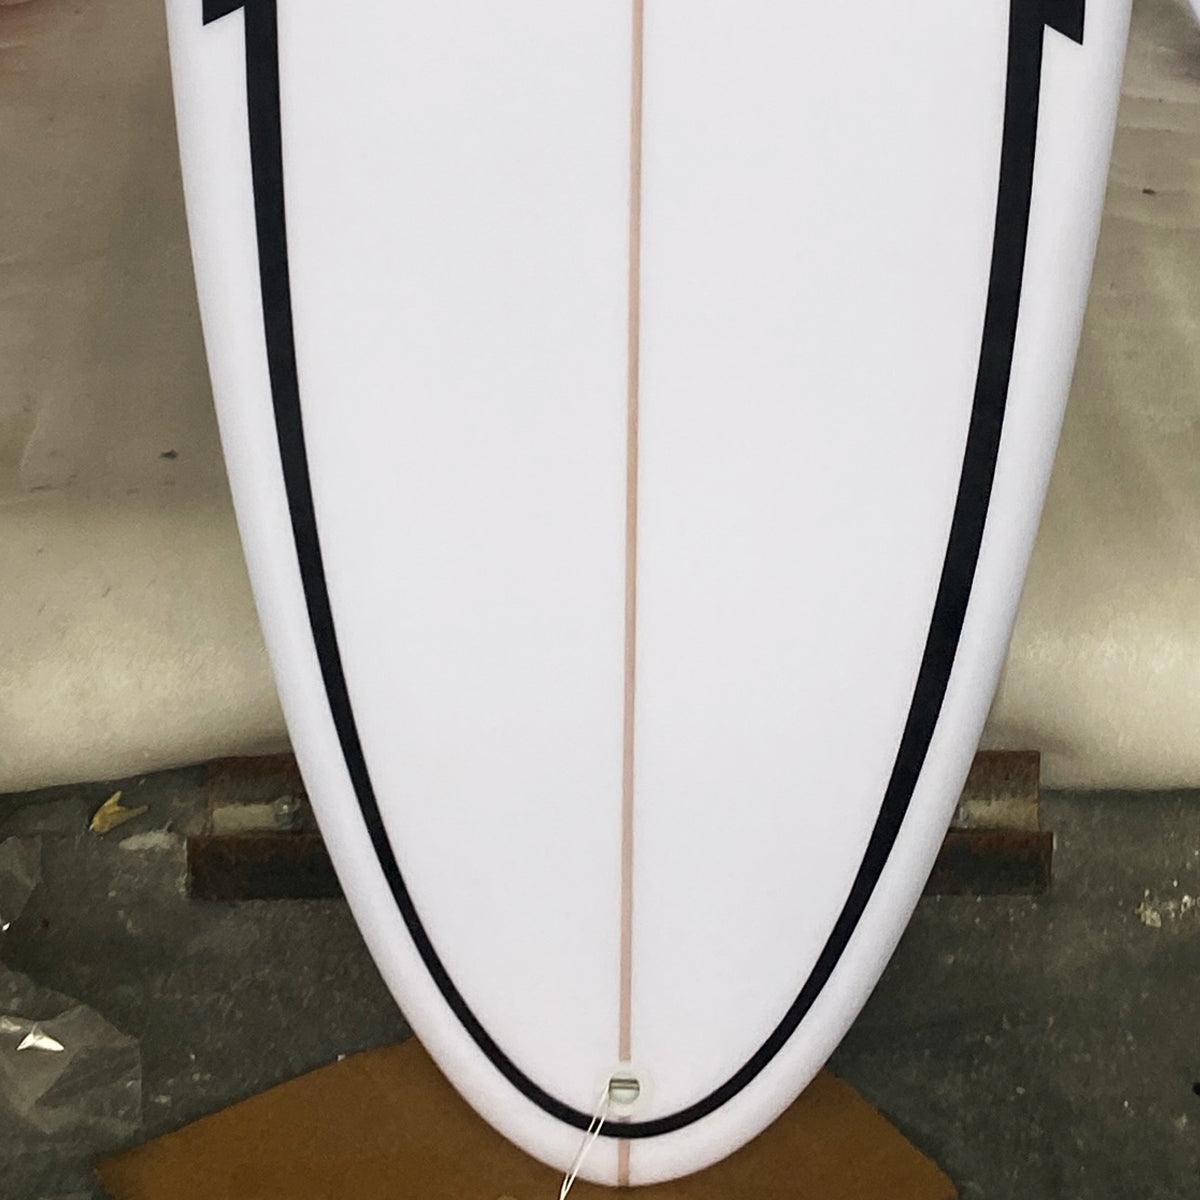 QS DISCUS 6'8 SURFBOARD